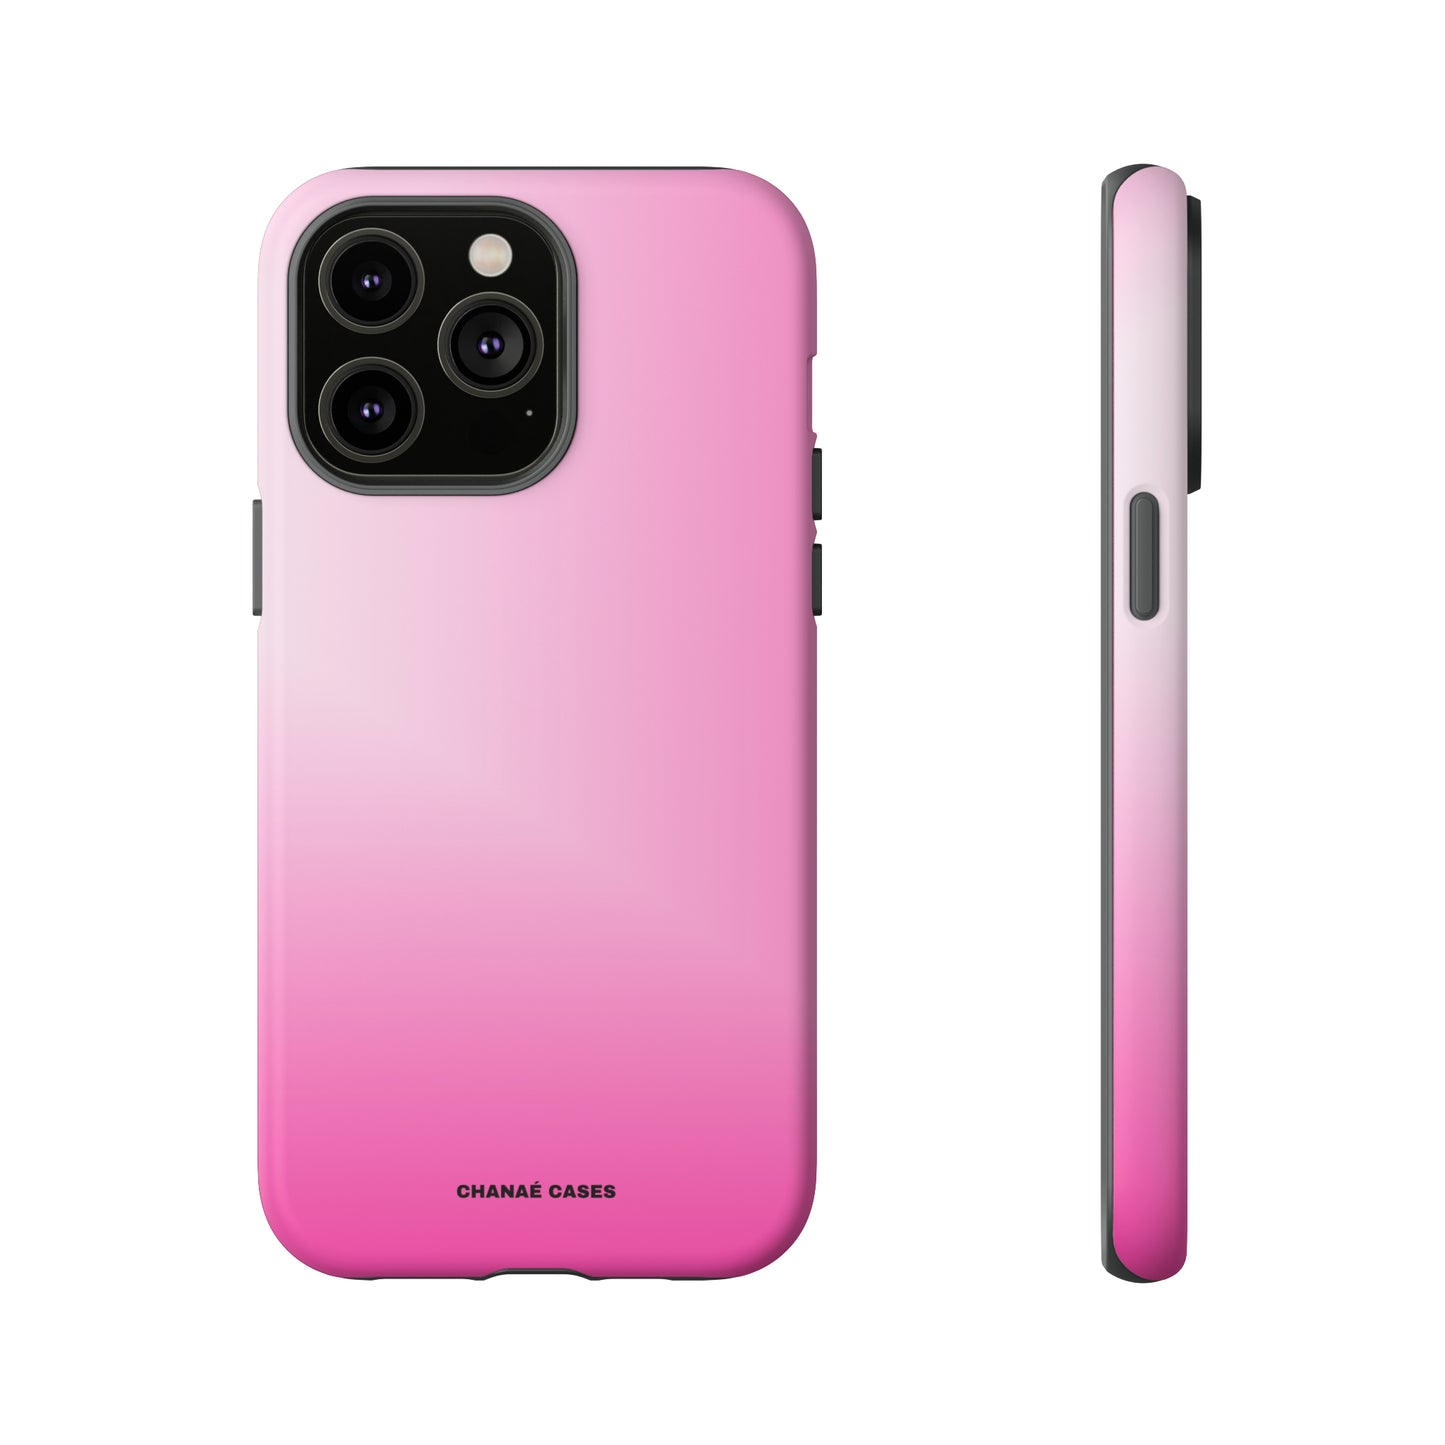 Jazzie iPhone "Tough" Case (Hot Pink)